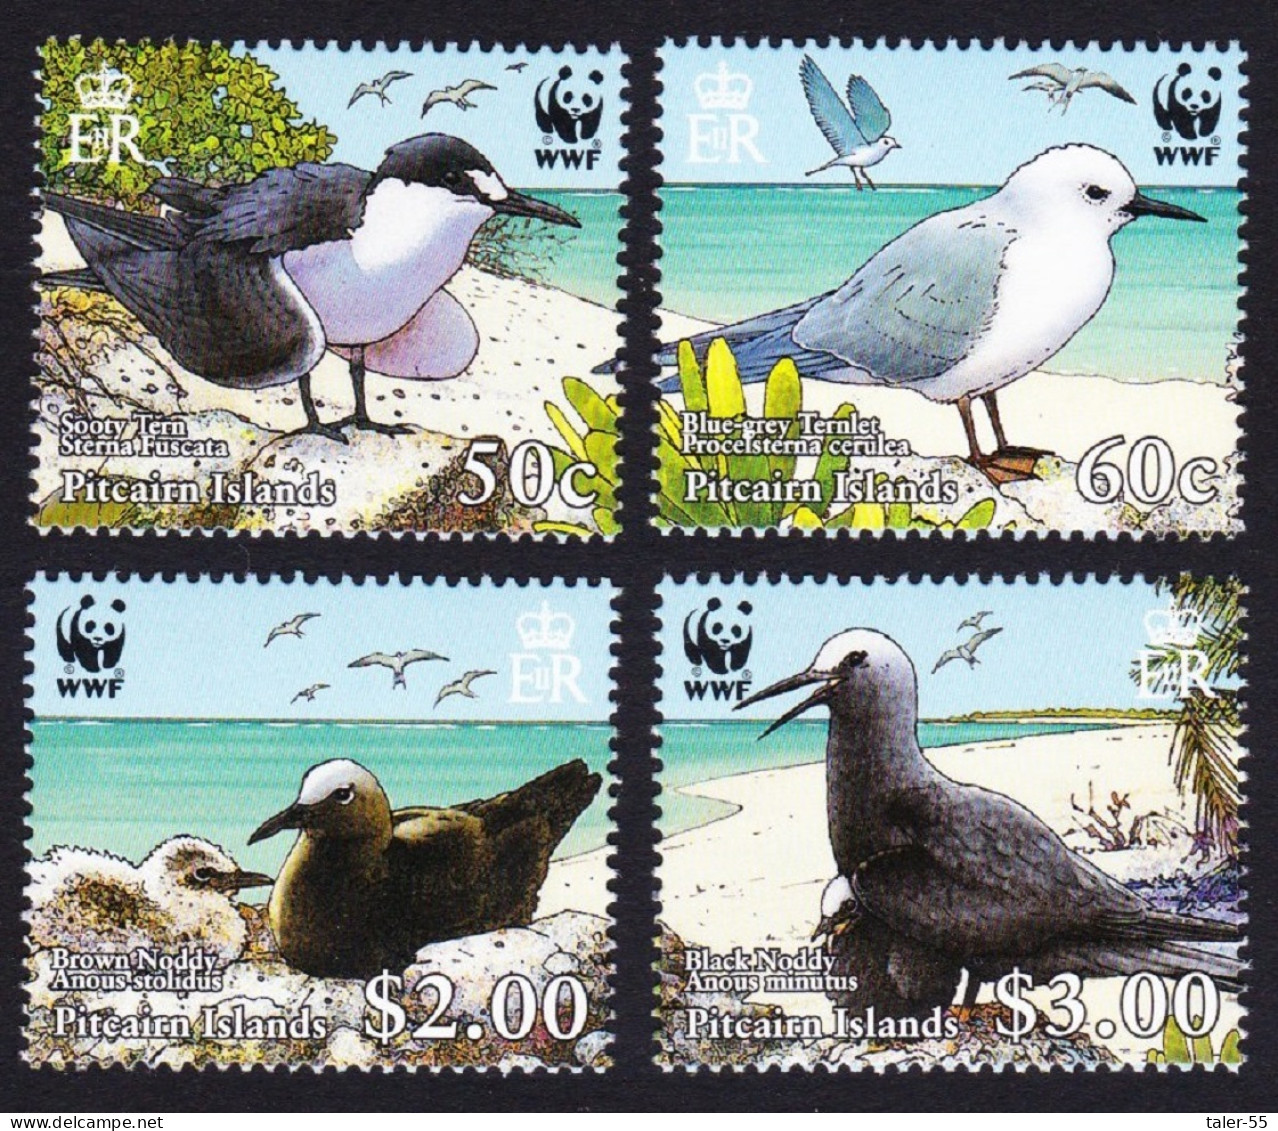 Pitcairn WWF Seabirds 4v 2007 MNH SG#724-727 MI#717-720 Sc#647a-d - Pitcairninsel